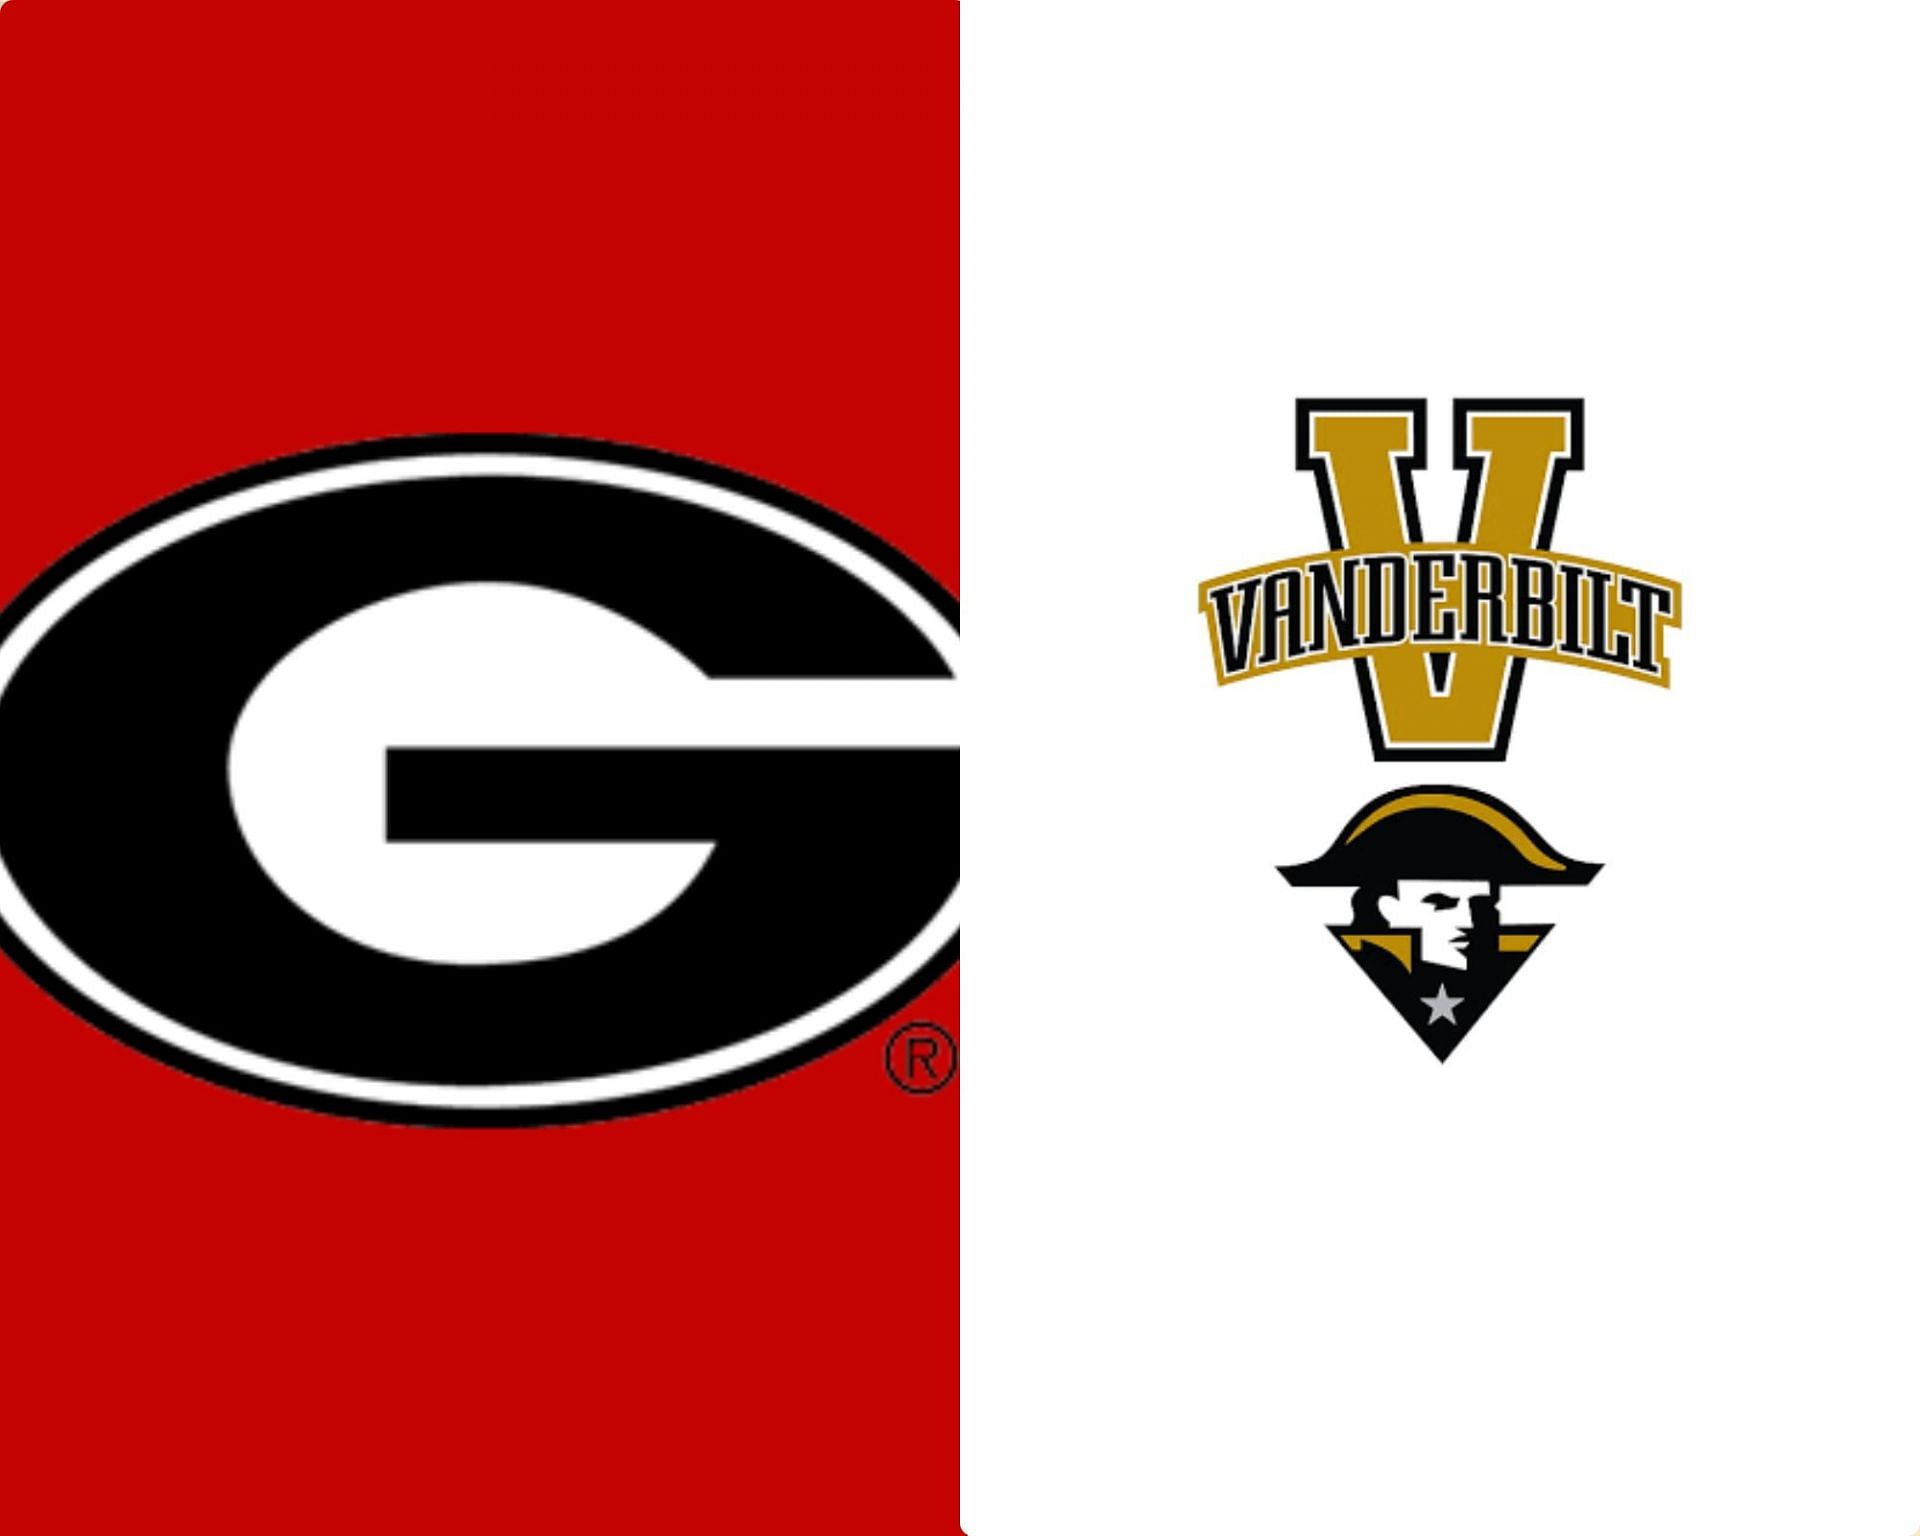 The Georgia Bulldogs face the Vanderbilt Commodores tomorrow